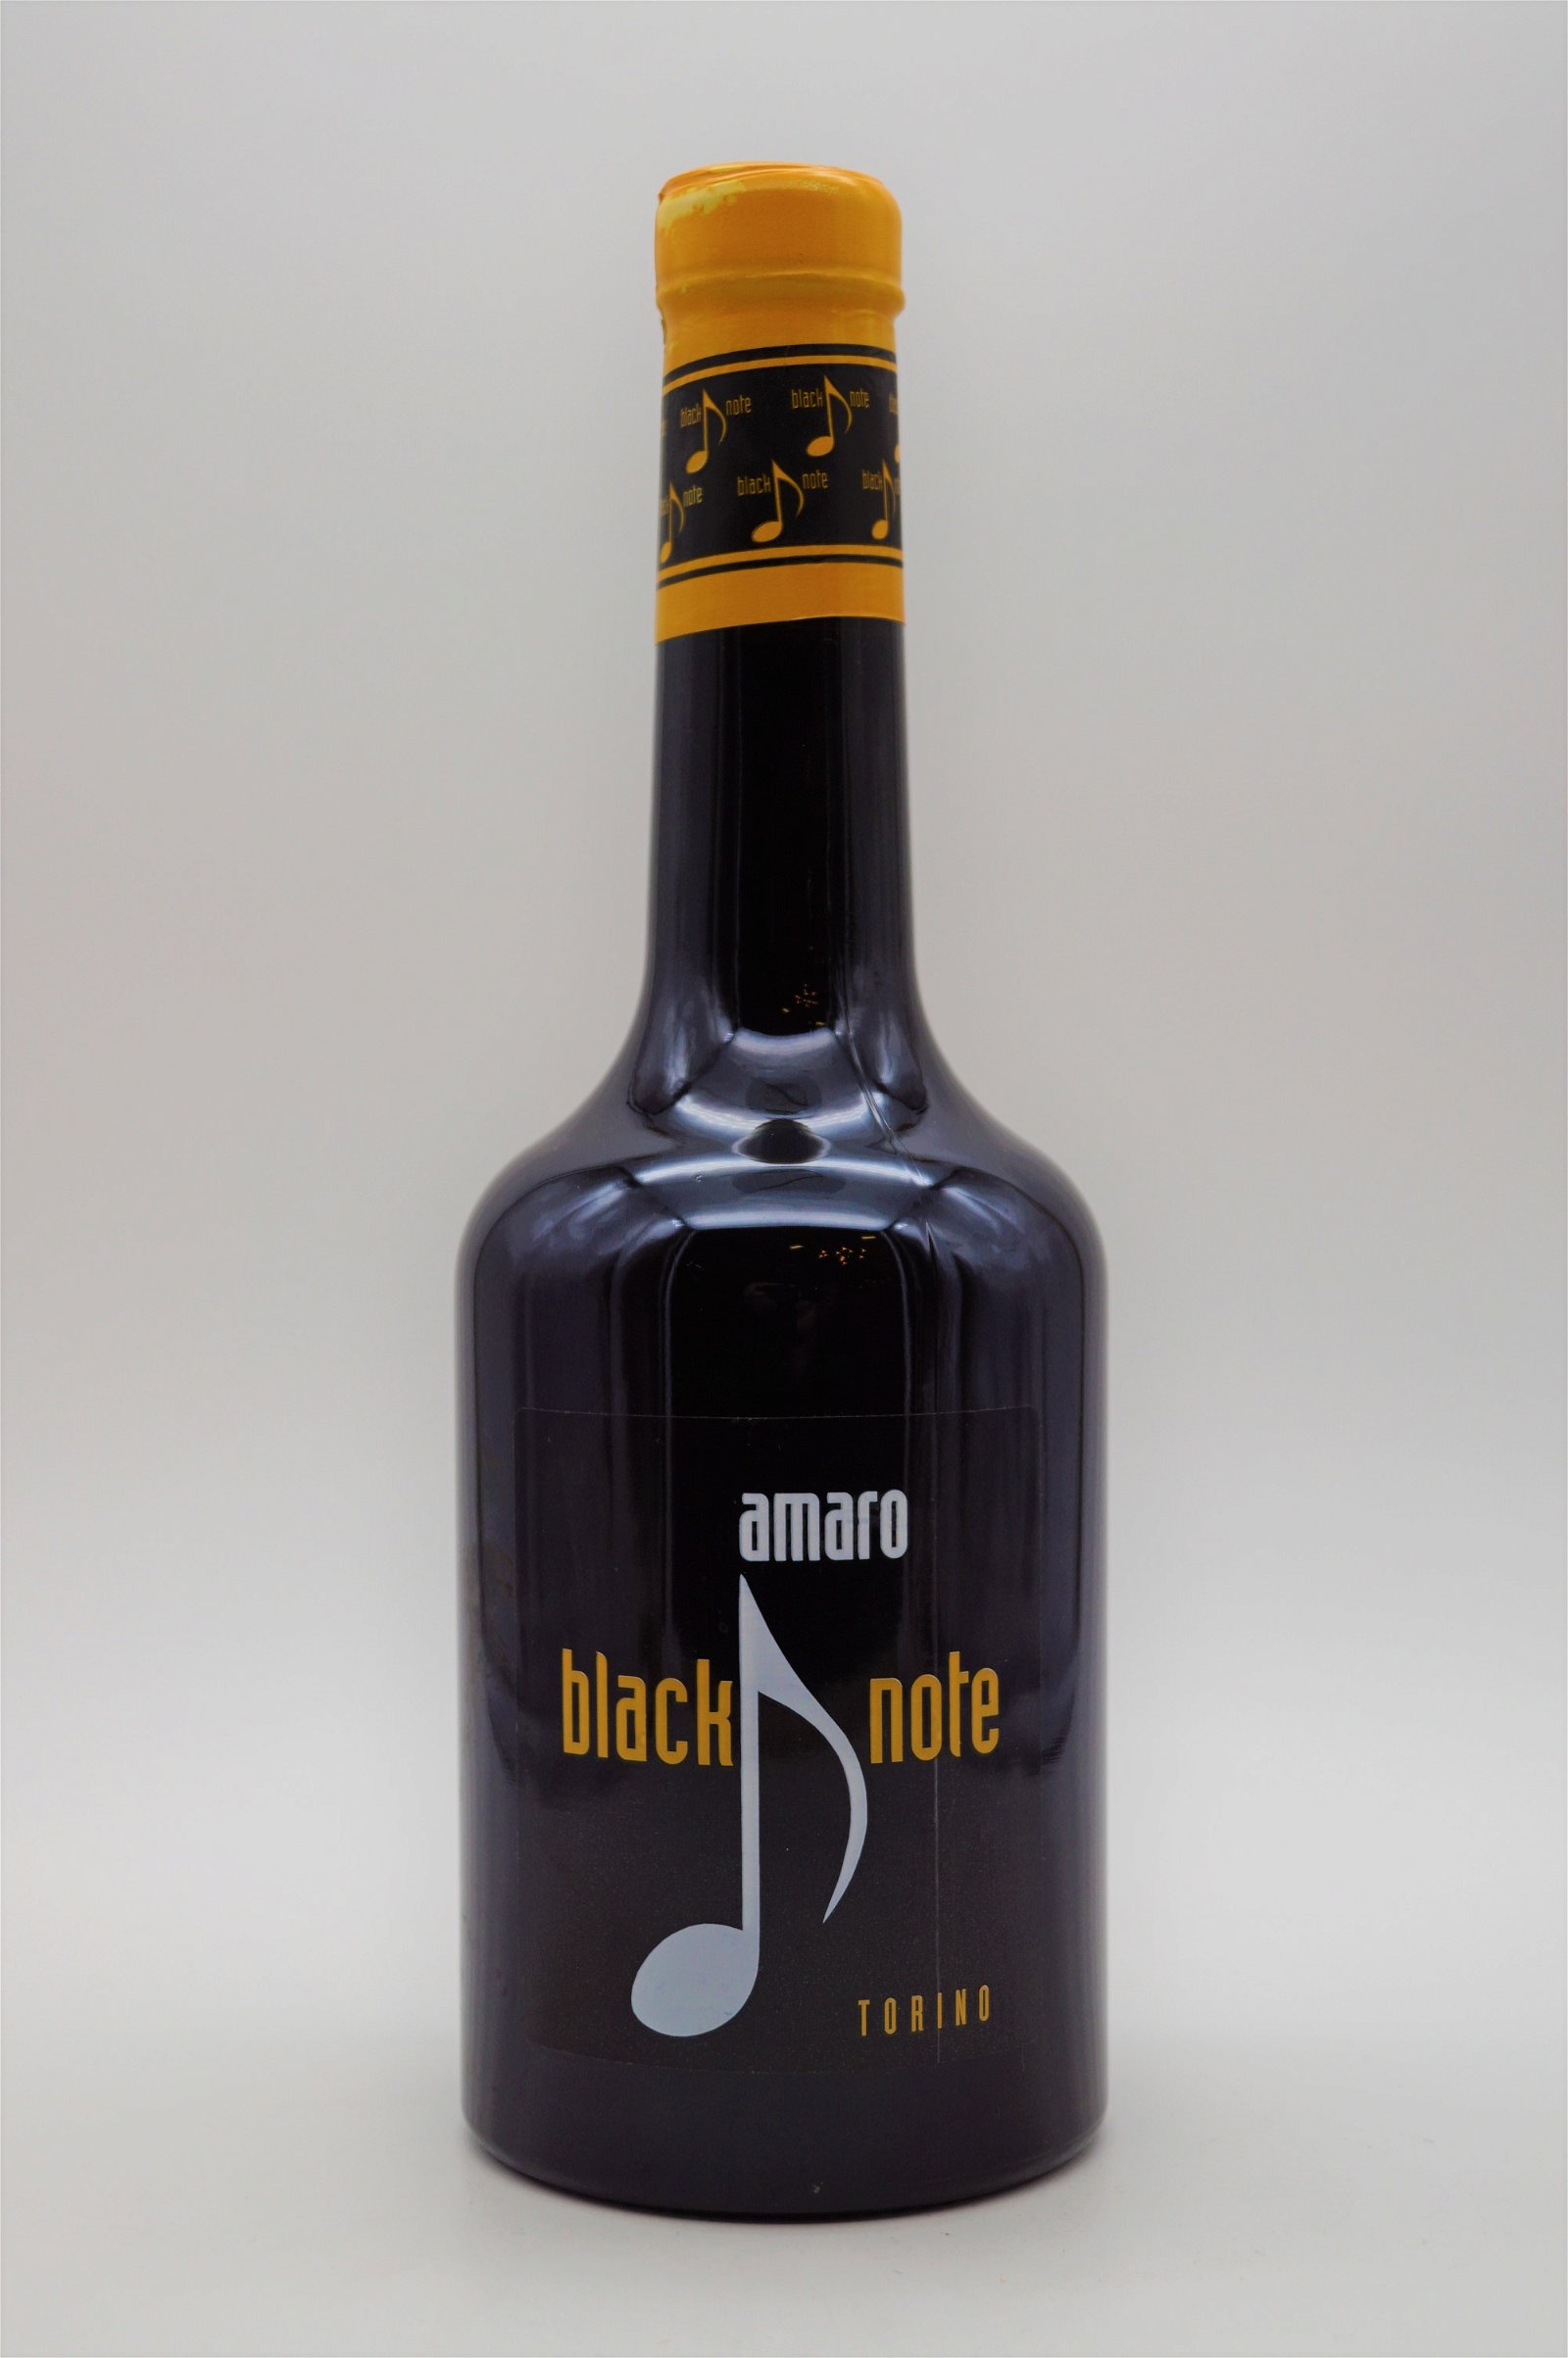 Black Note Amaro Torino